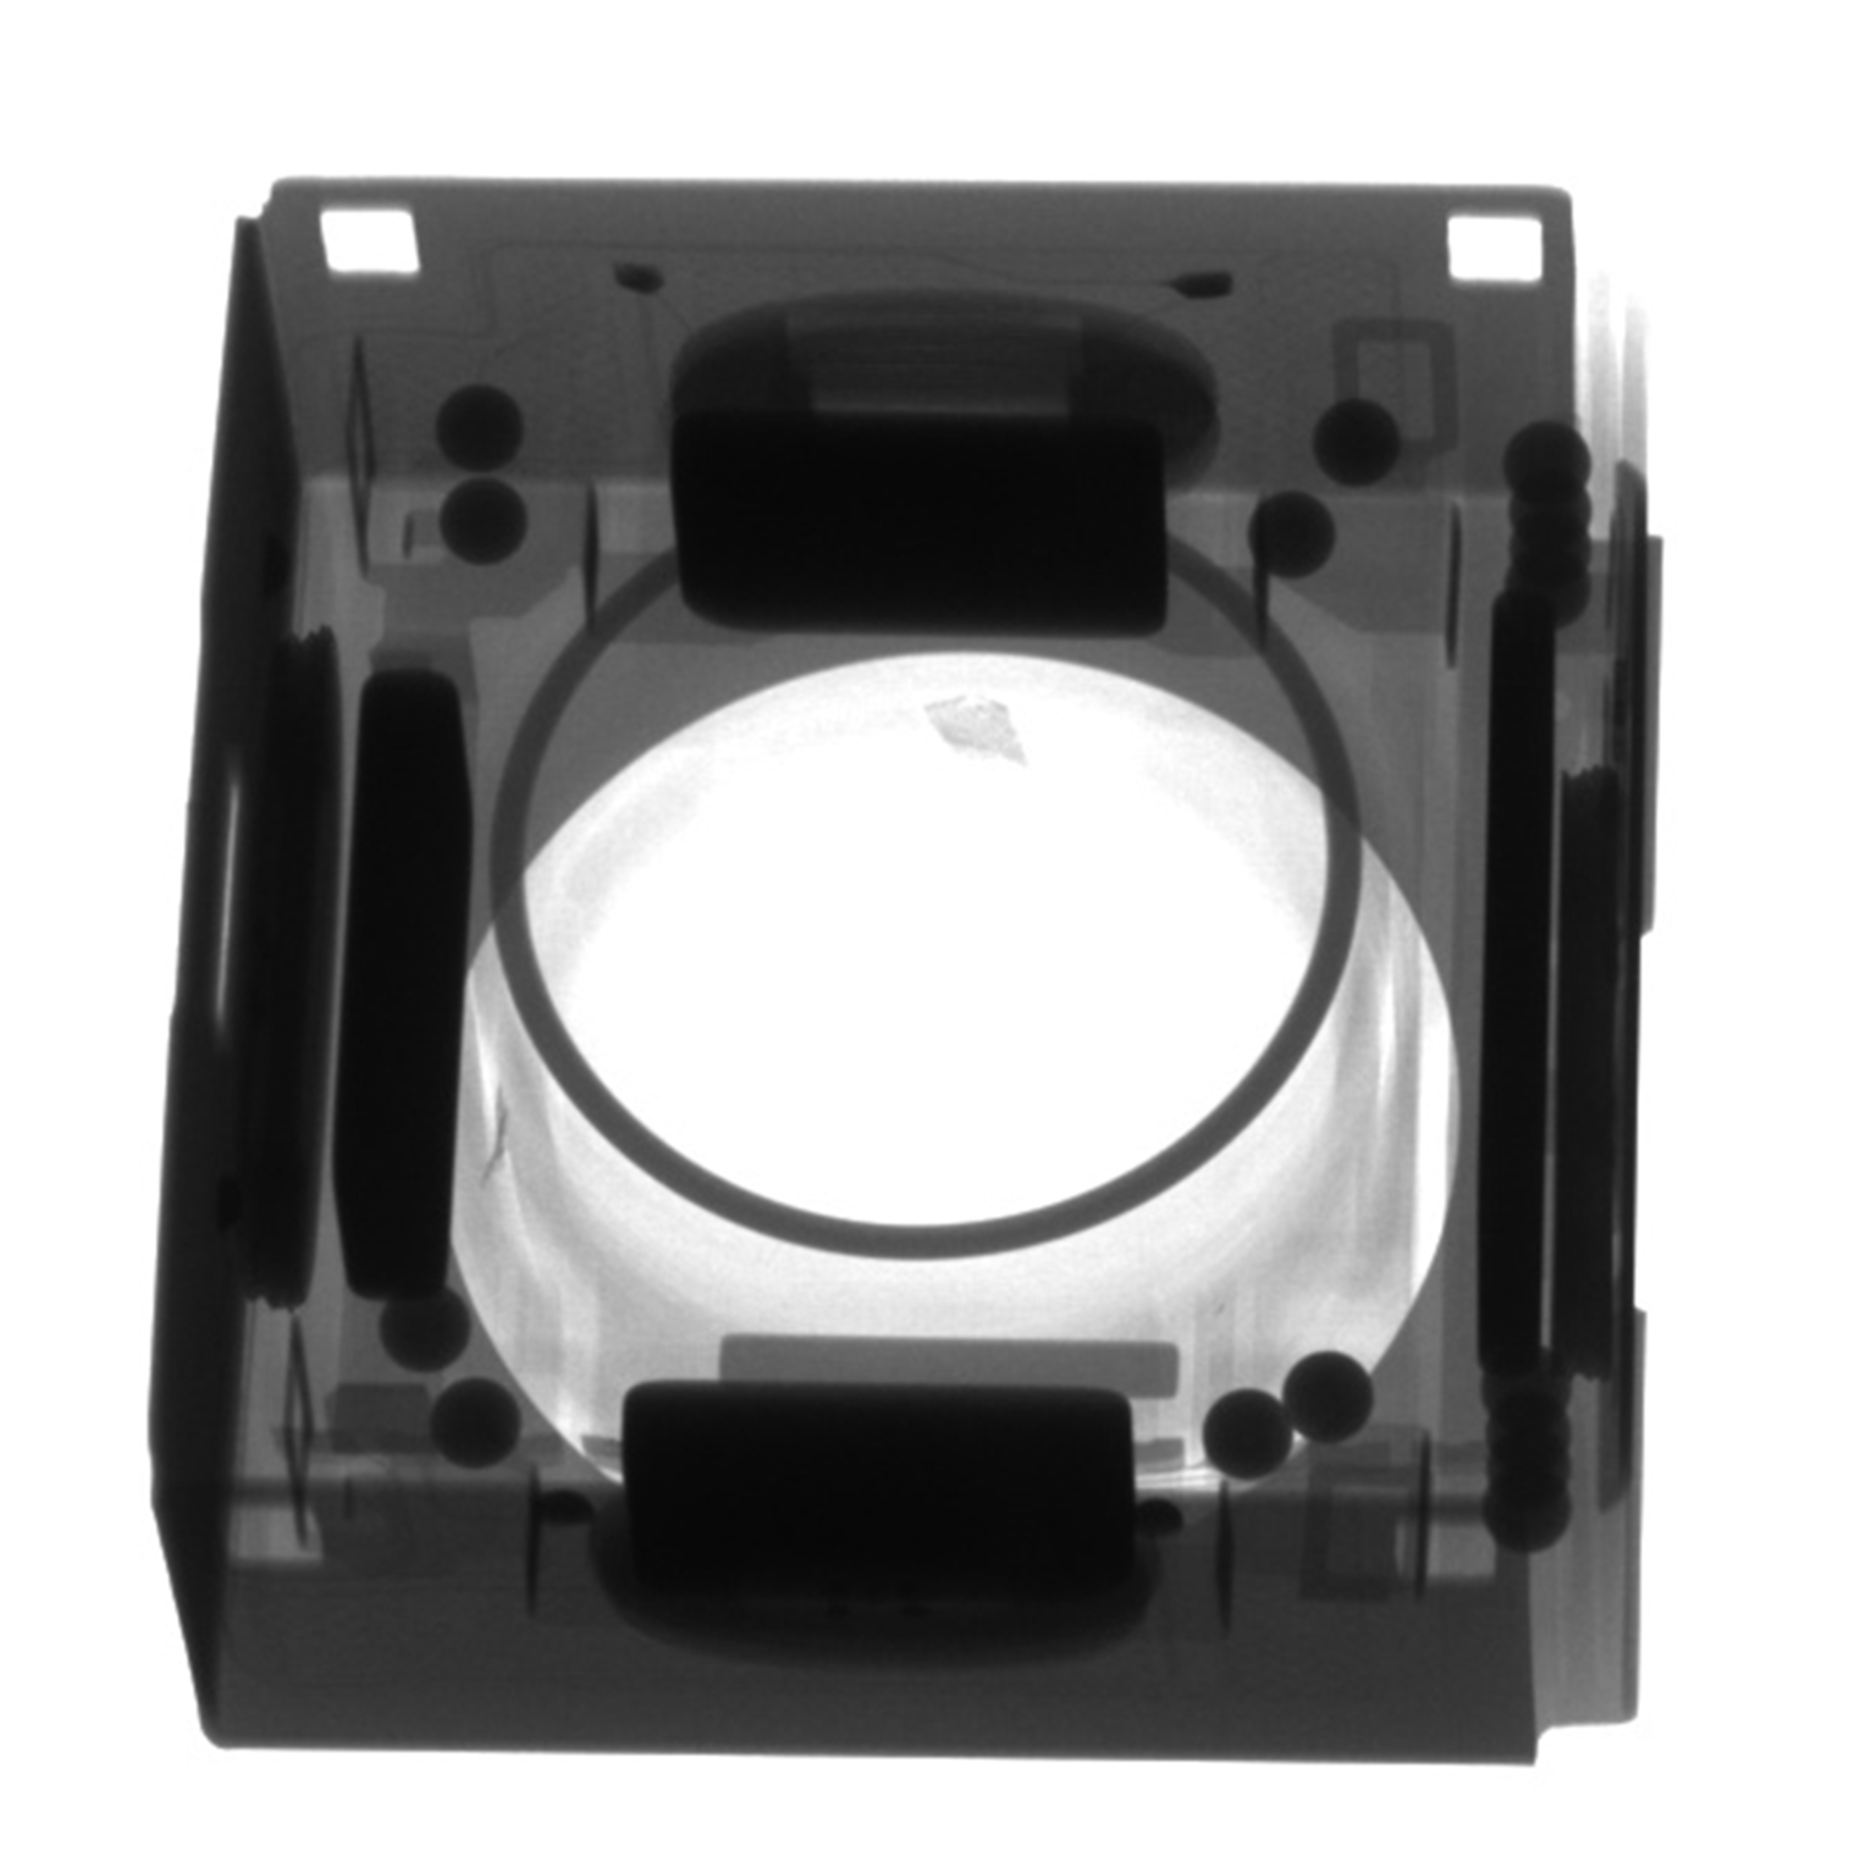 X-ray image of Rear camera module